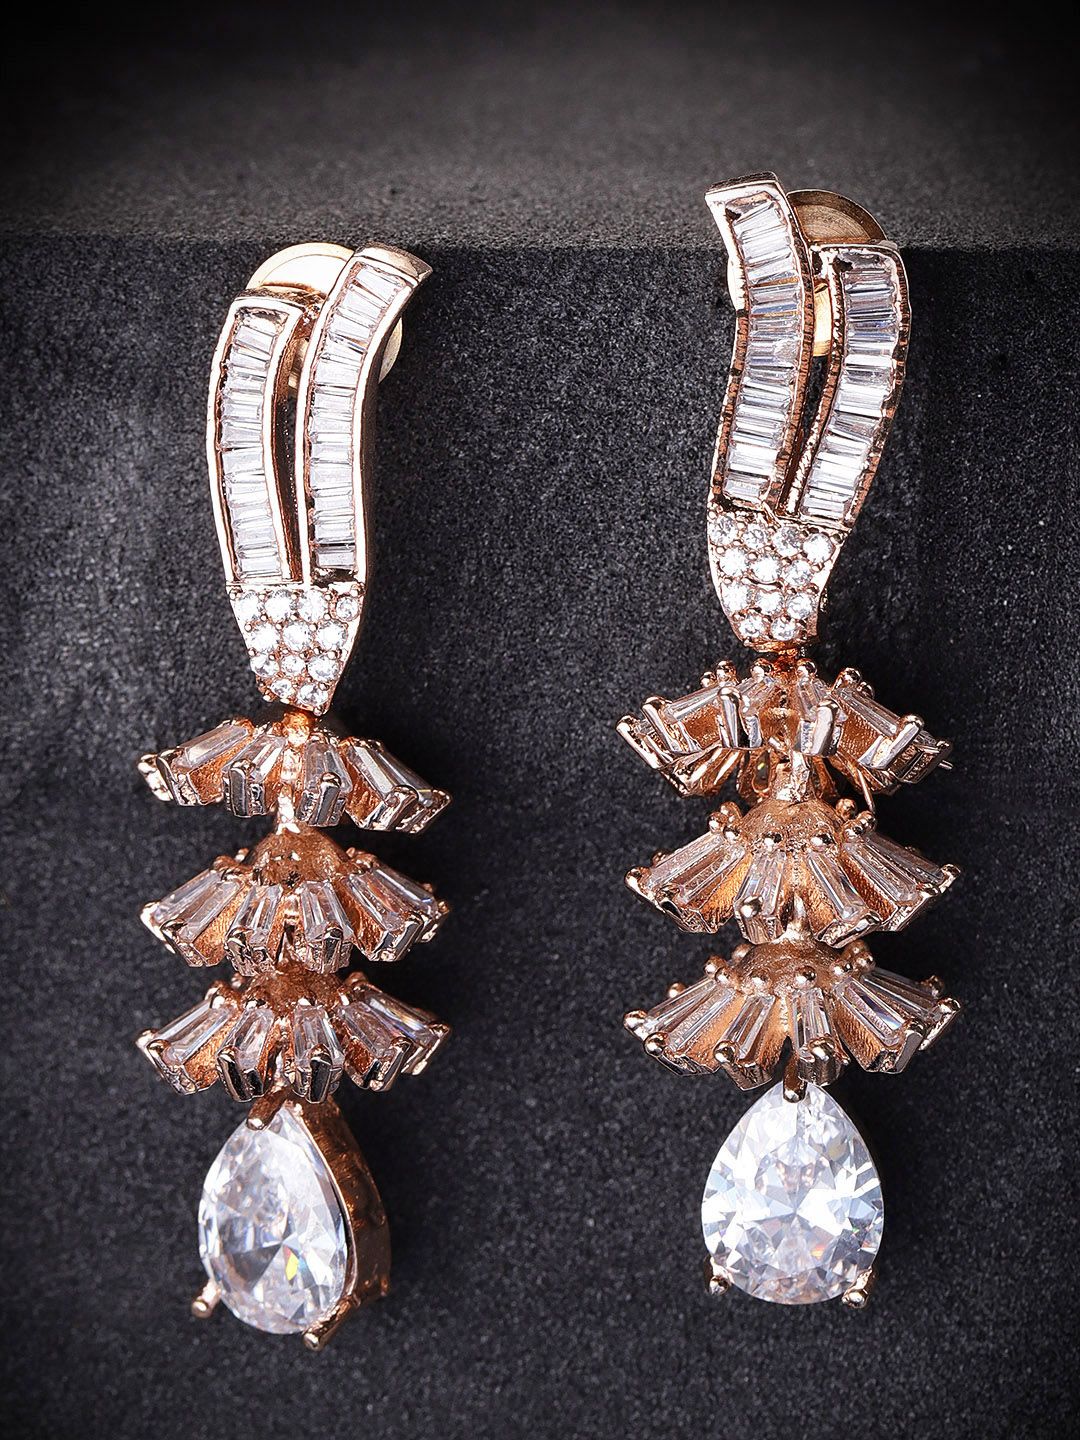 Priyaasi Rose Gold-Plated American Diamond Studded Drop Earrings Price in India